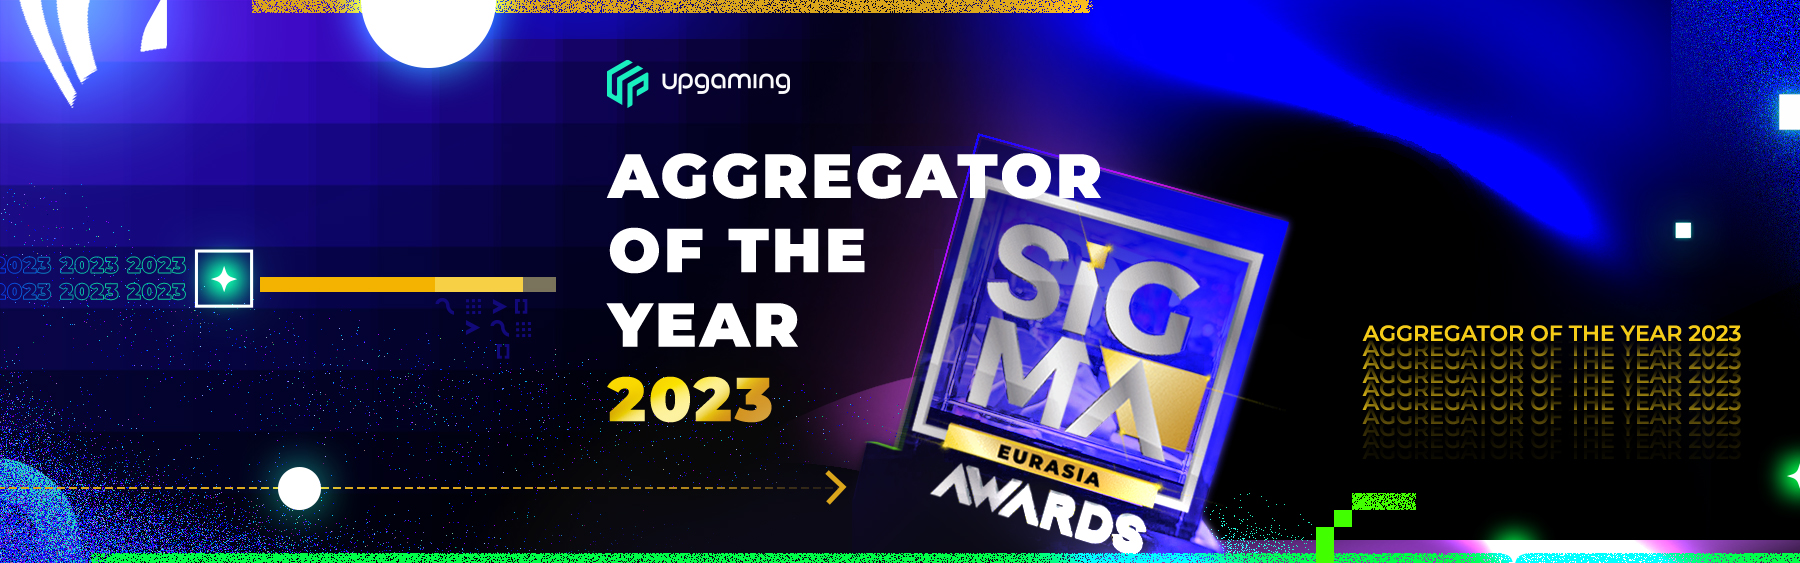 Upgaming has became the aggregator of the year at SiGMA Awards